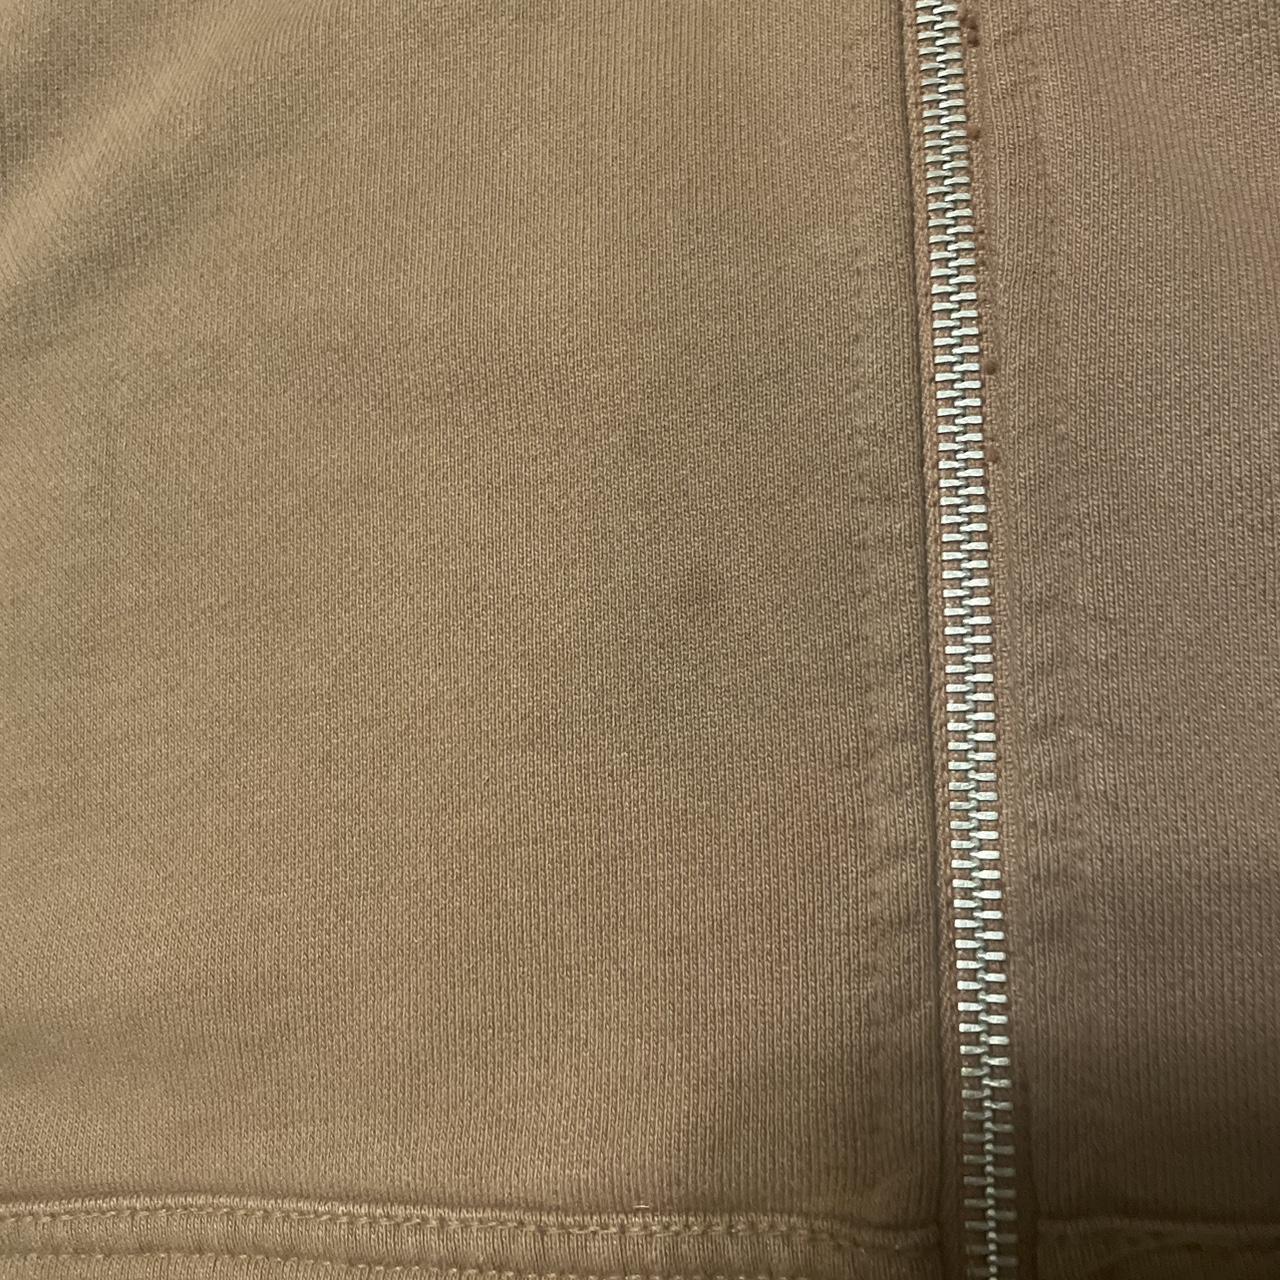 christy hoodie (brandy melville zip up) has a stain - Depop